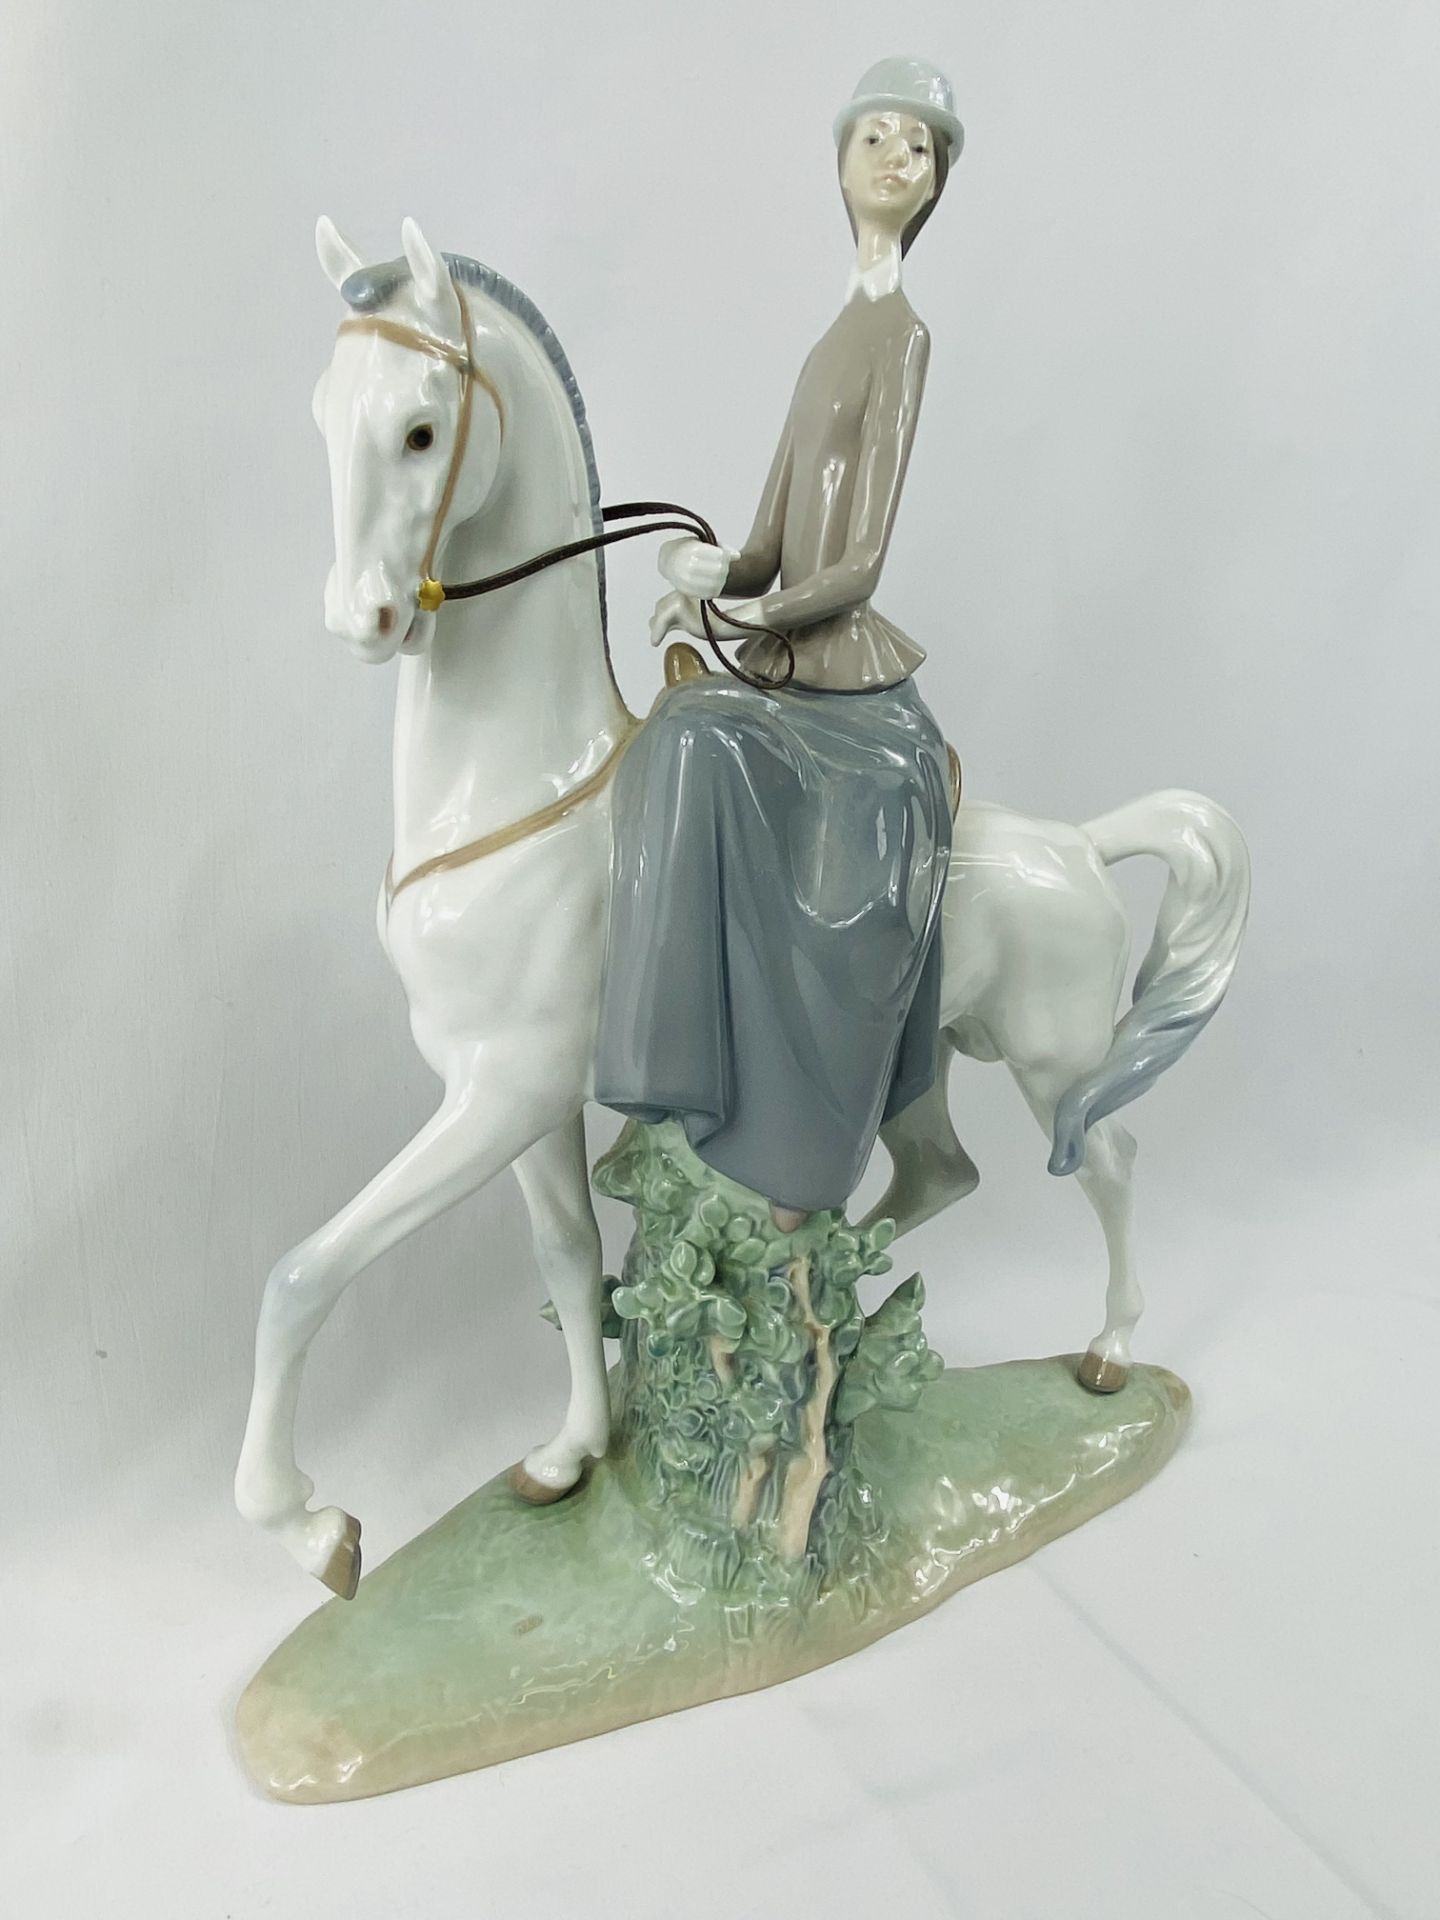 Lladro figure of a lady on horseback - Image 3 of 4